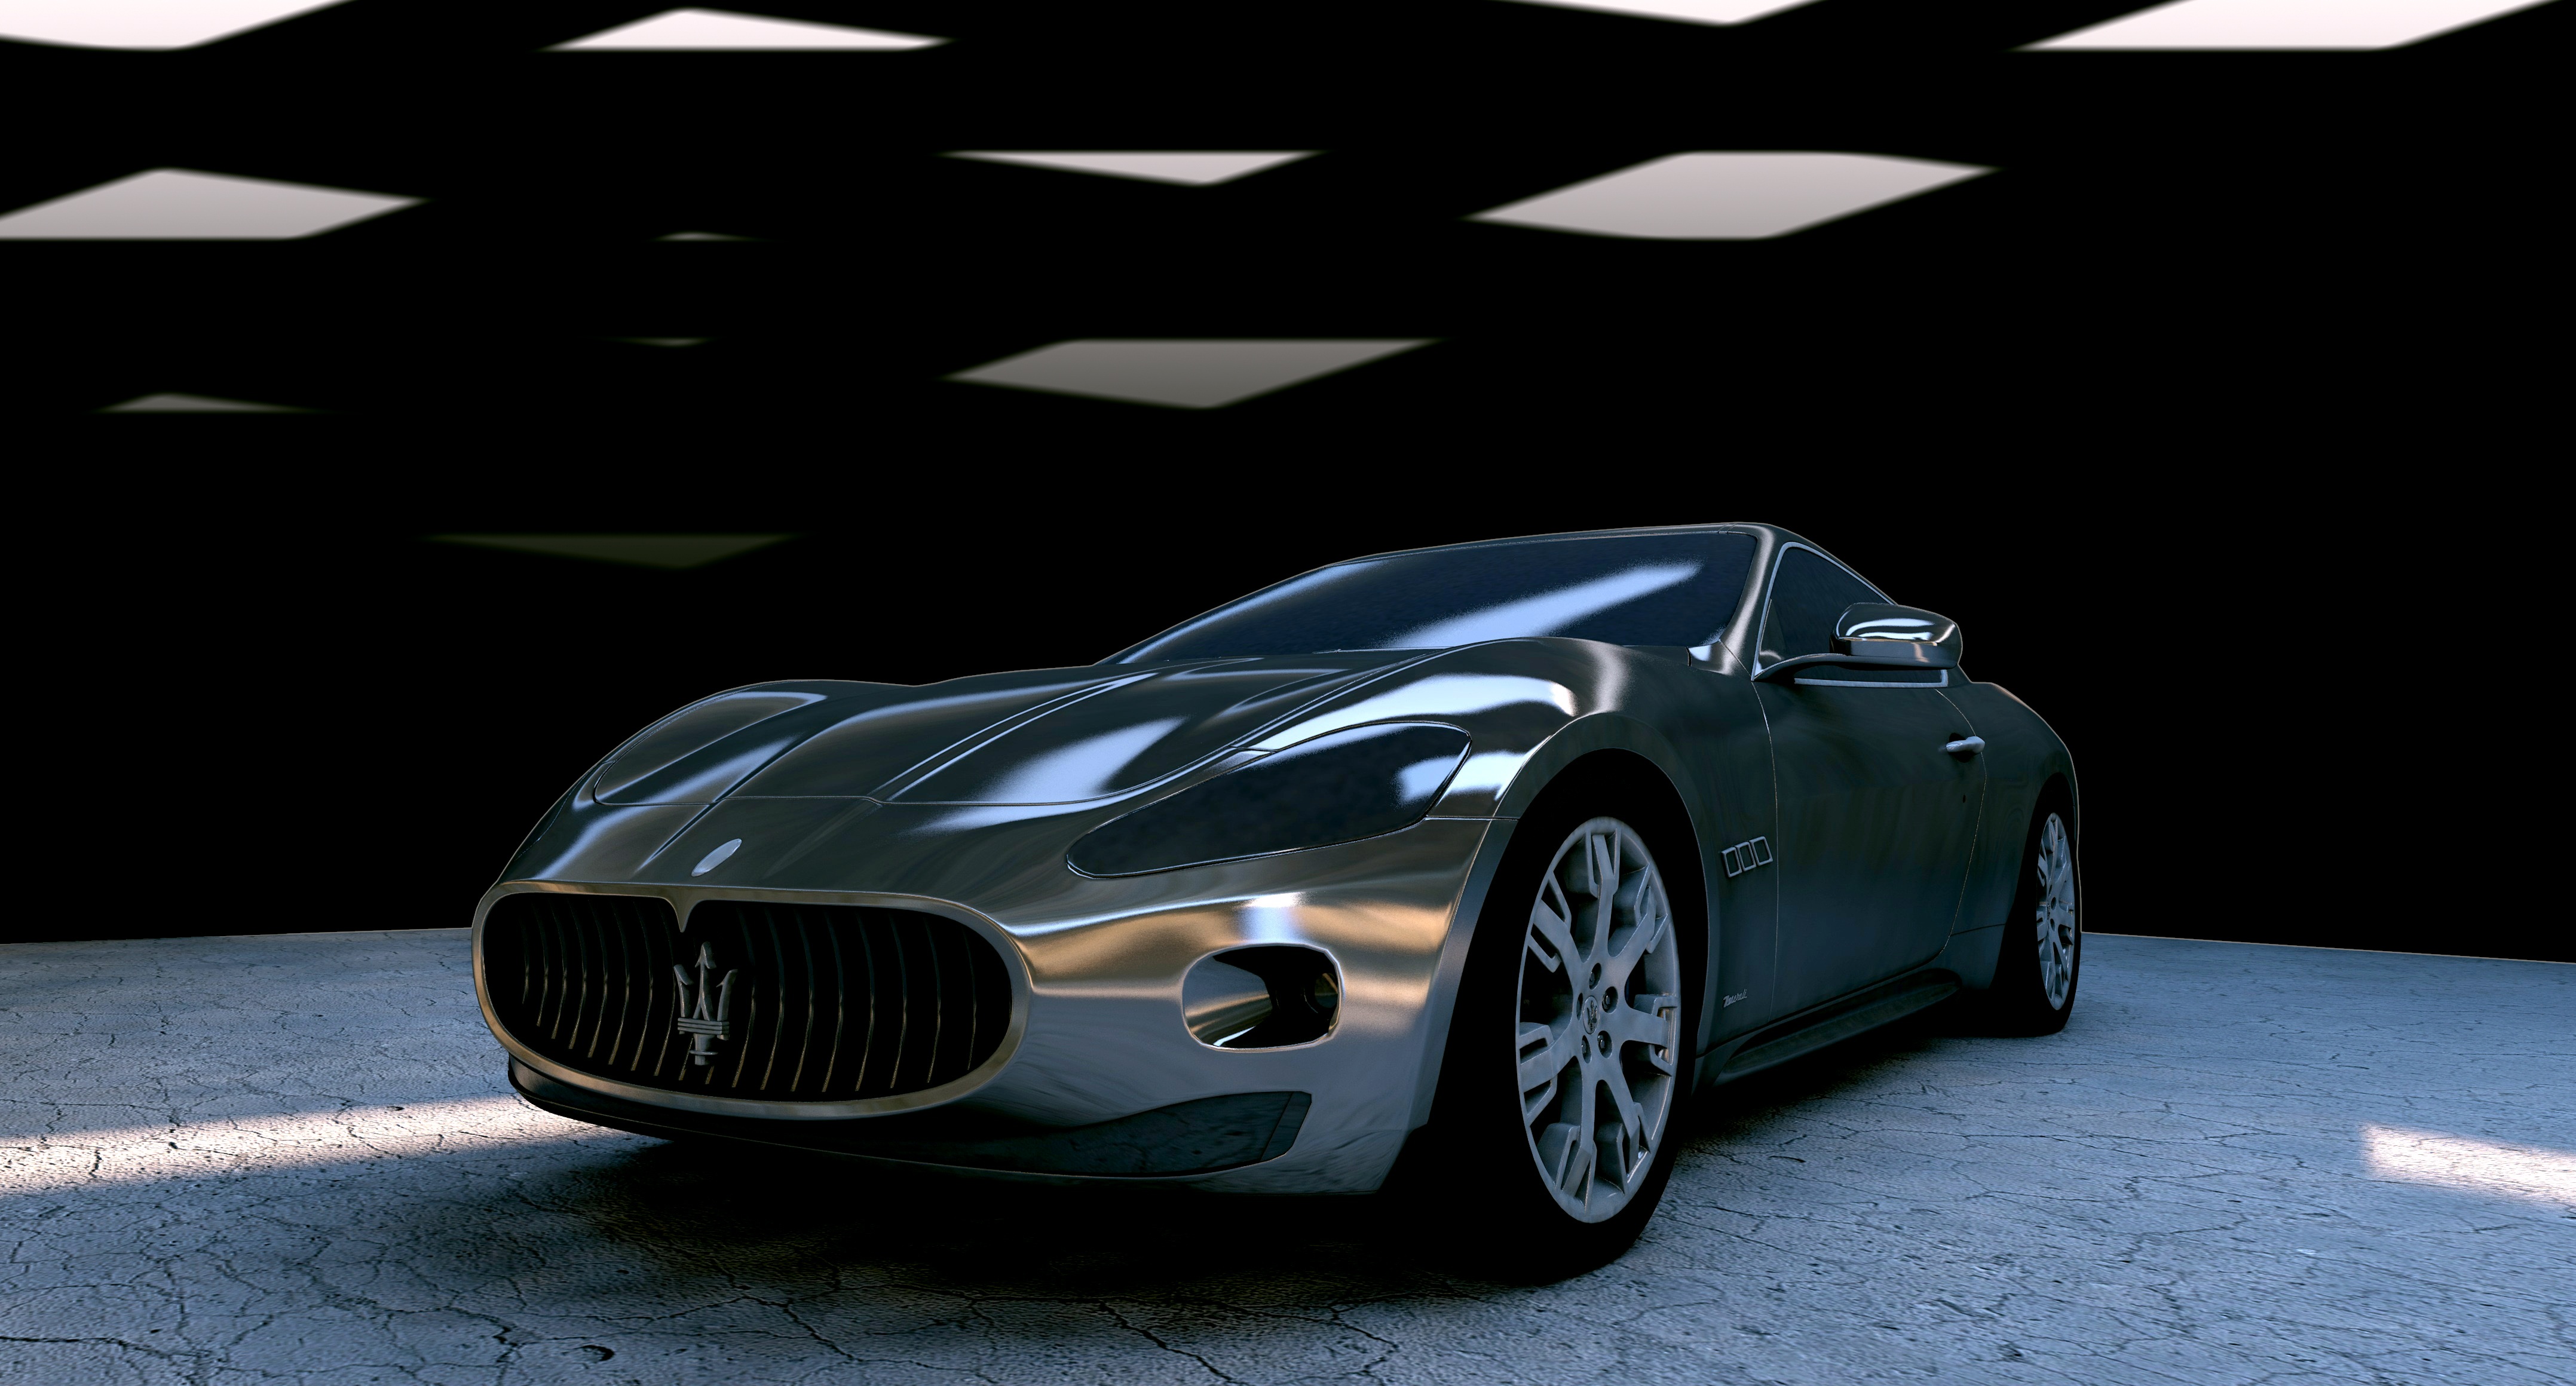 Télécharger des fonds d'écran Maserati Gt HD